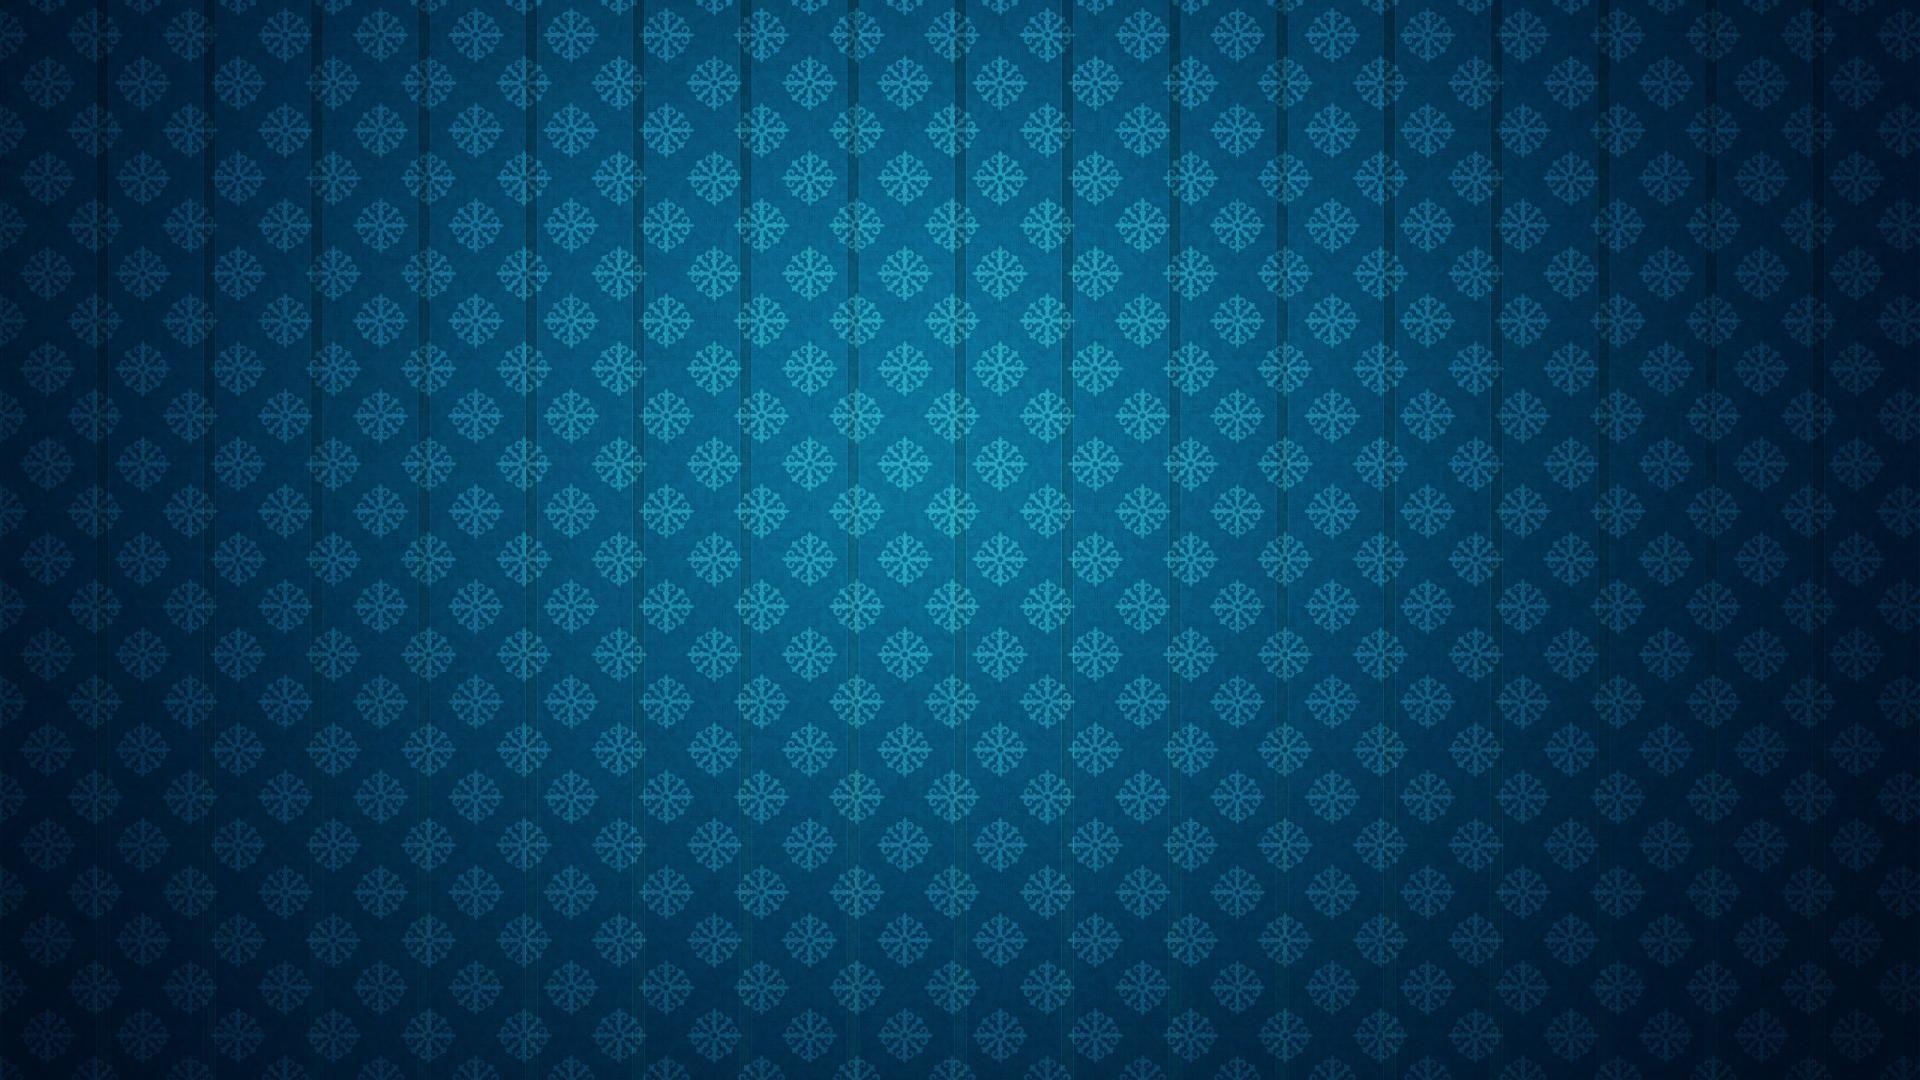 A. Blue background patterns